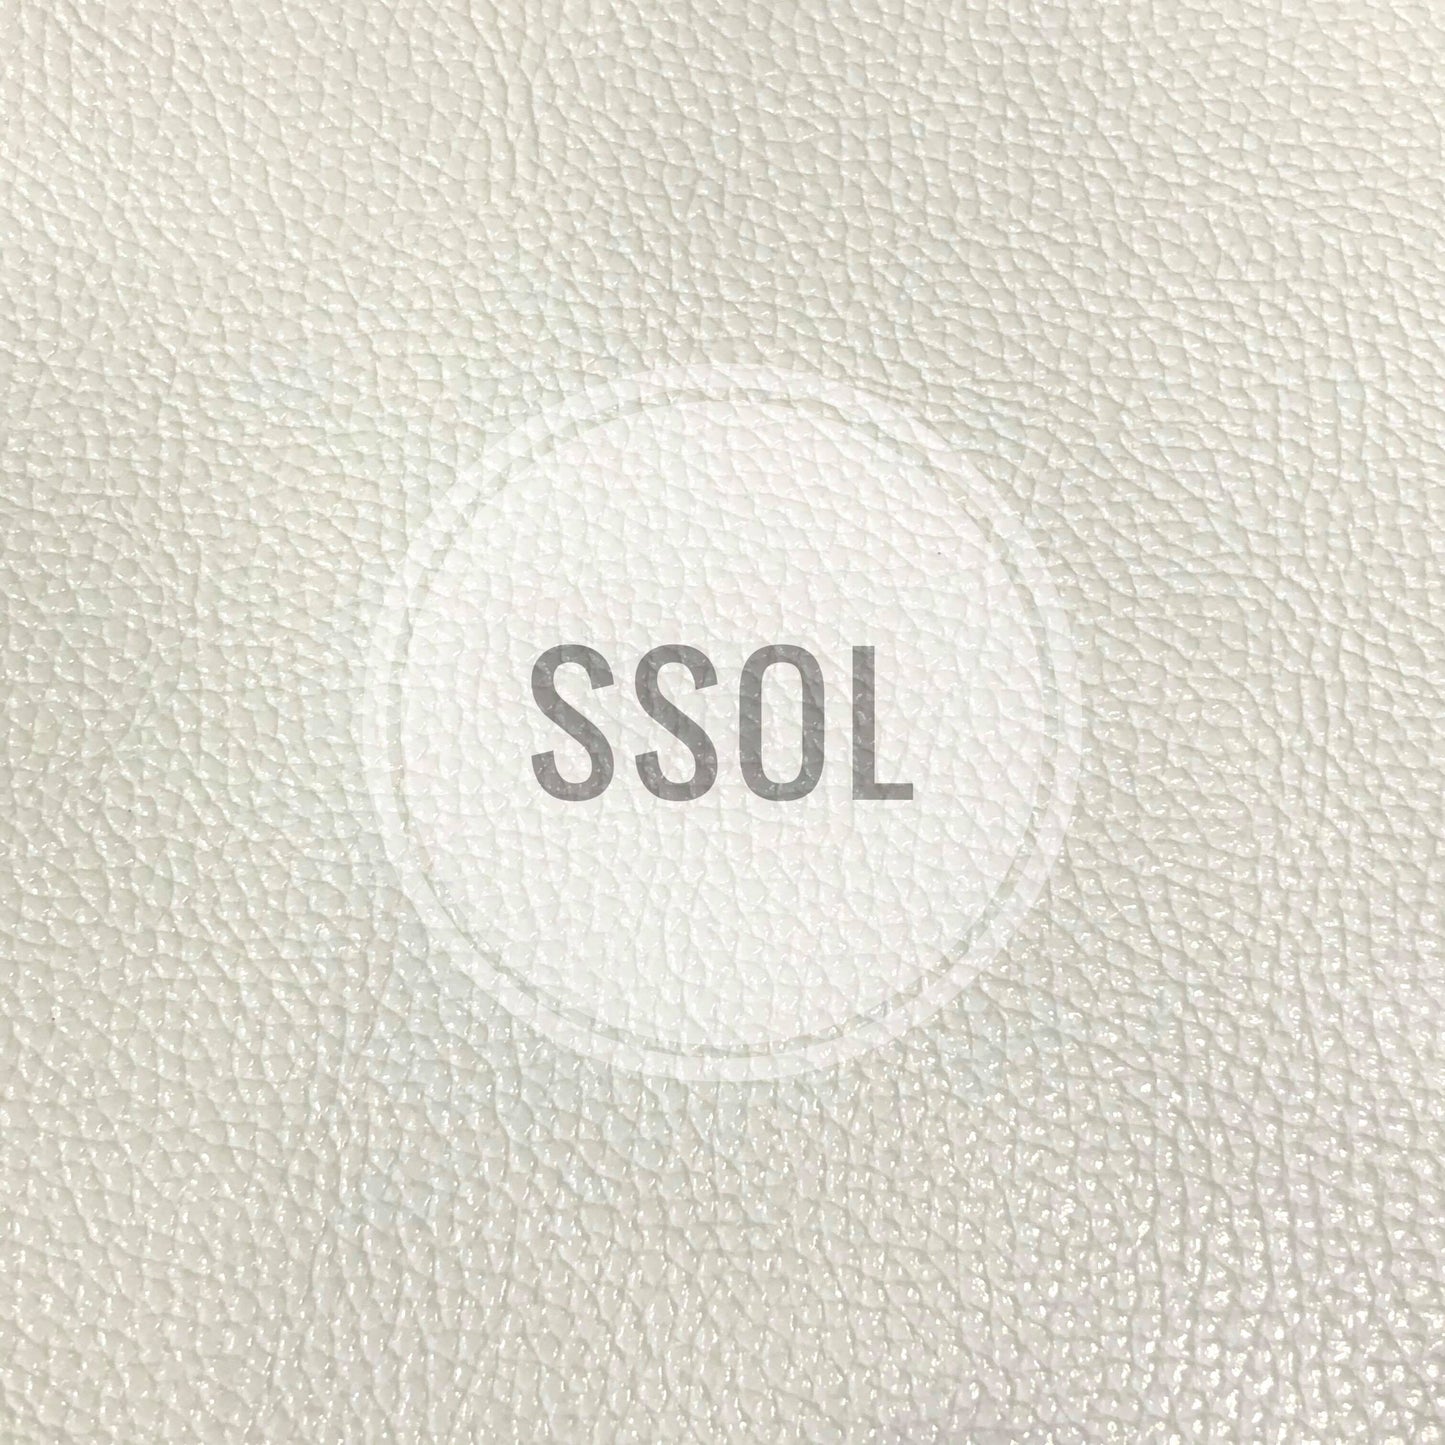 Vinyl/PU Leather - Plain Solids Textured 23 (White)